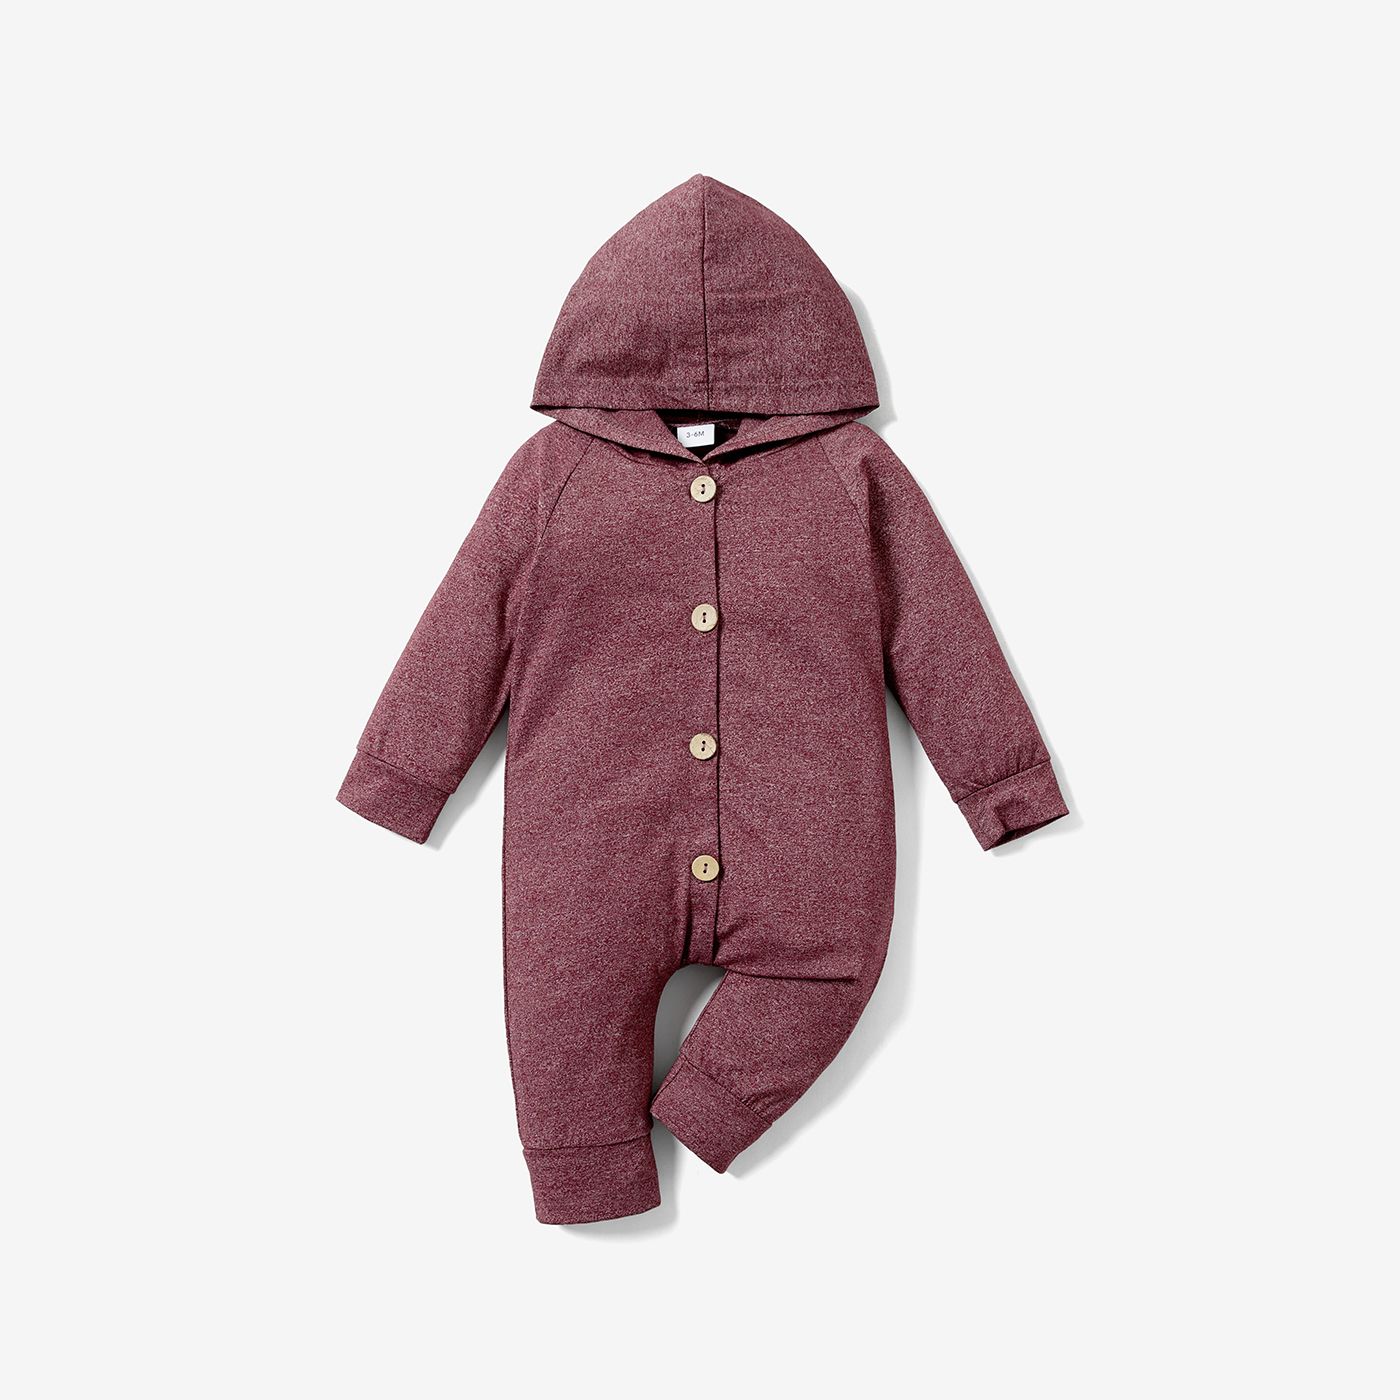 Buy Newborn Warm Jumpsuit online | Lazada.com.ph